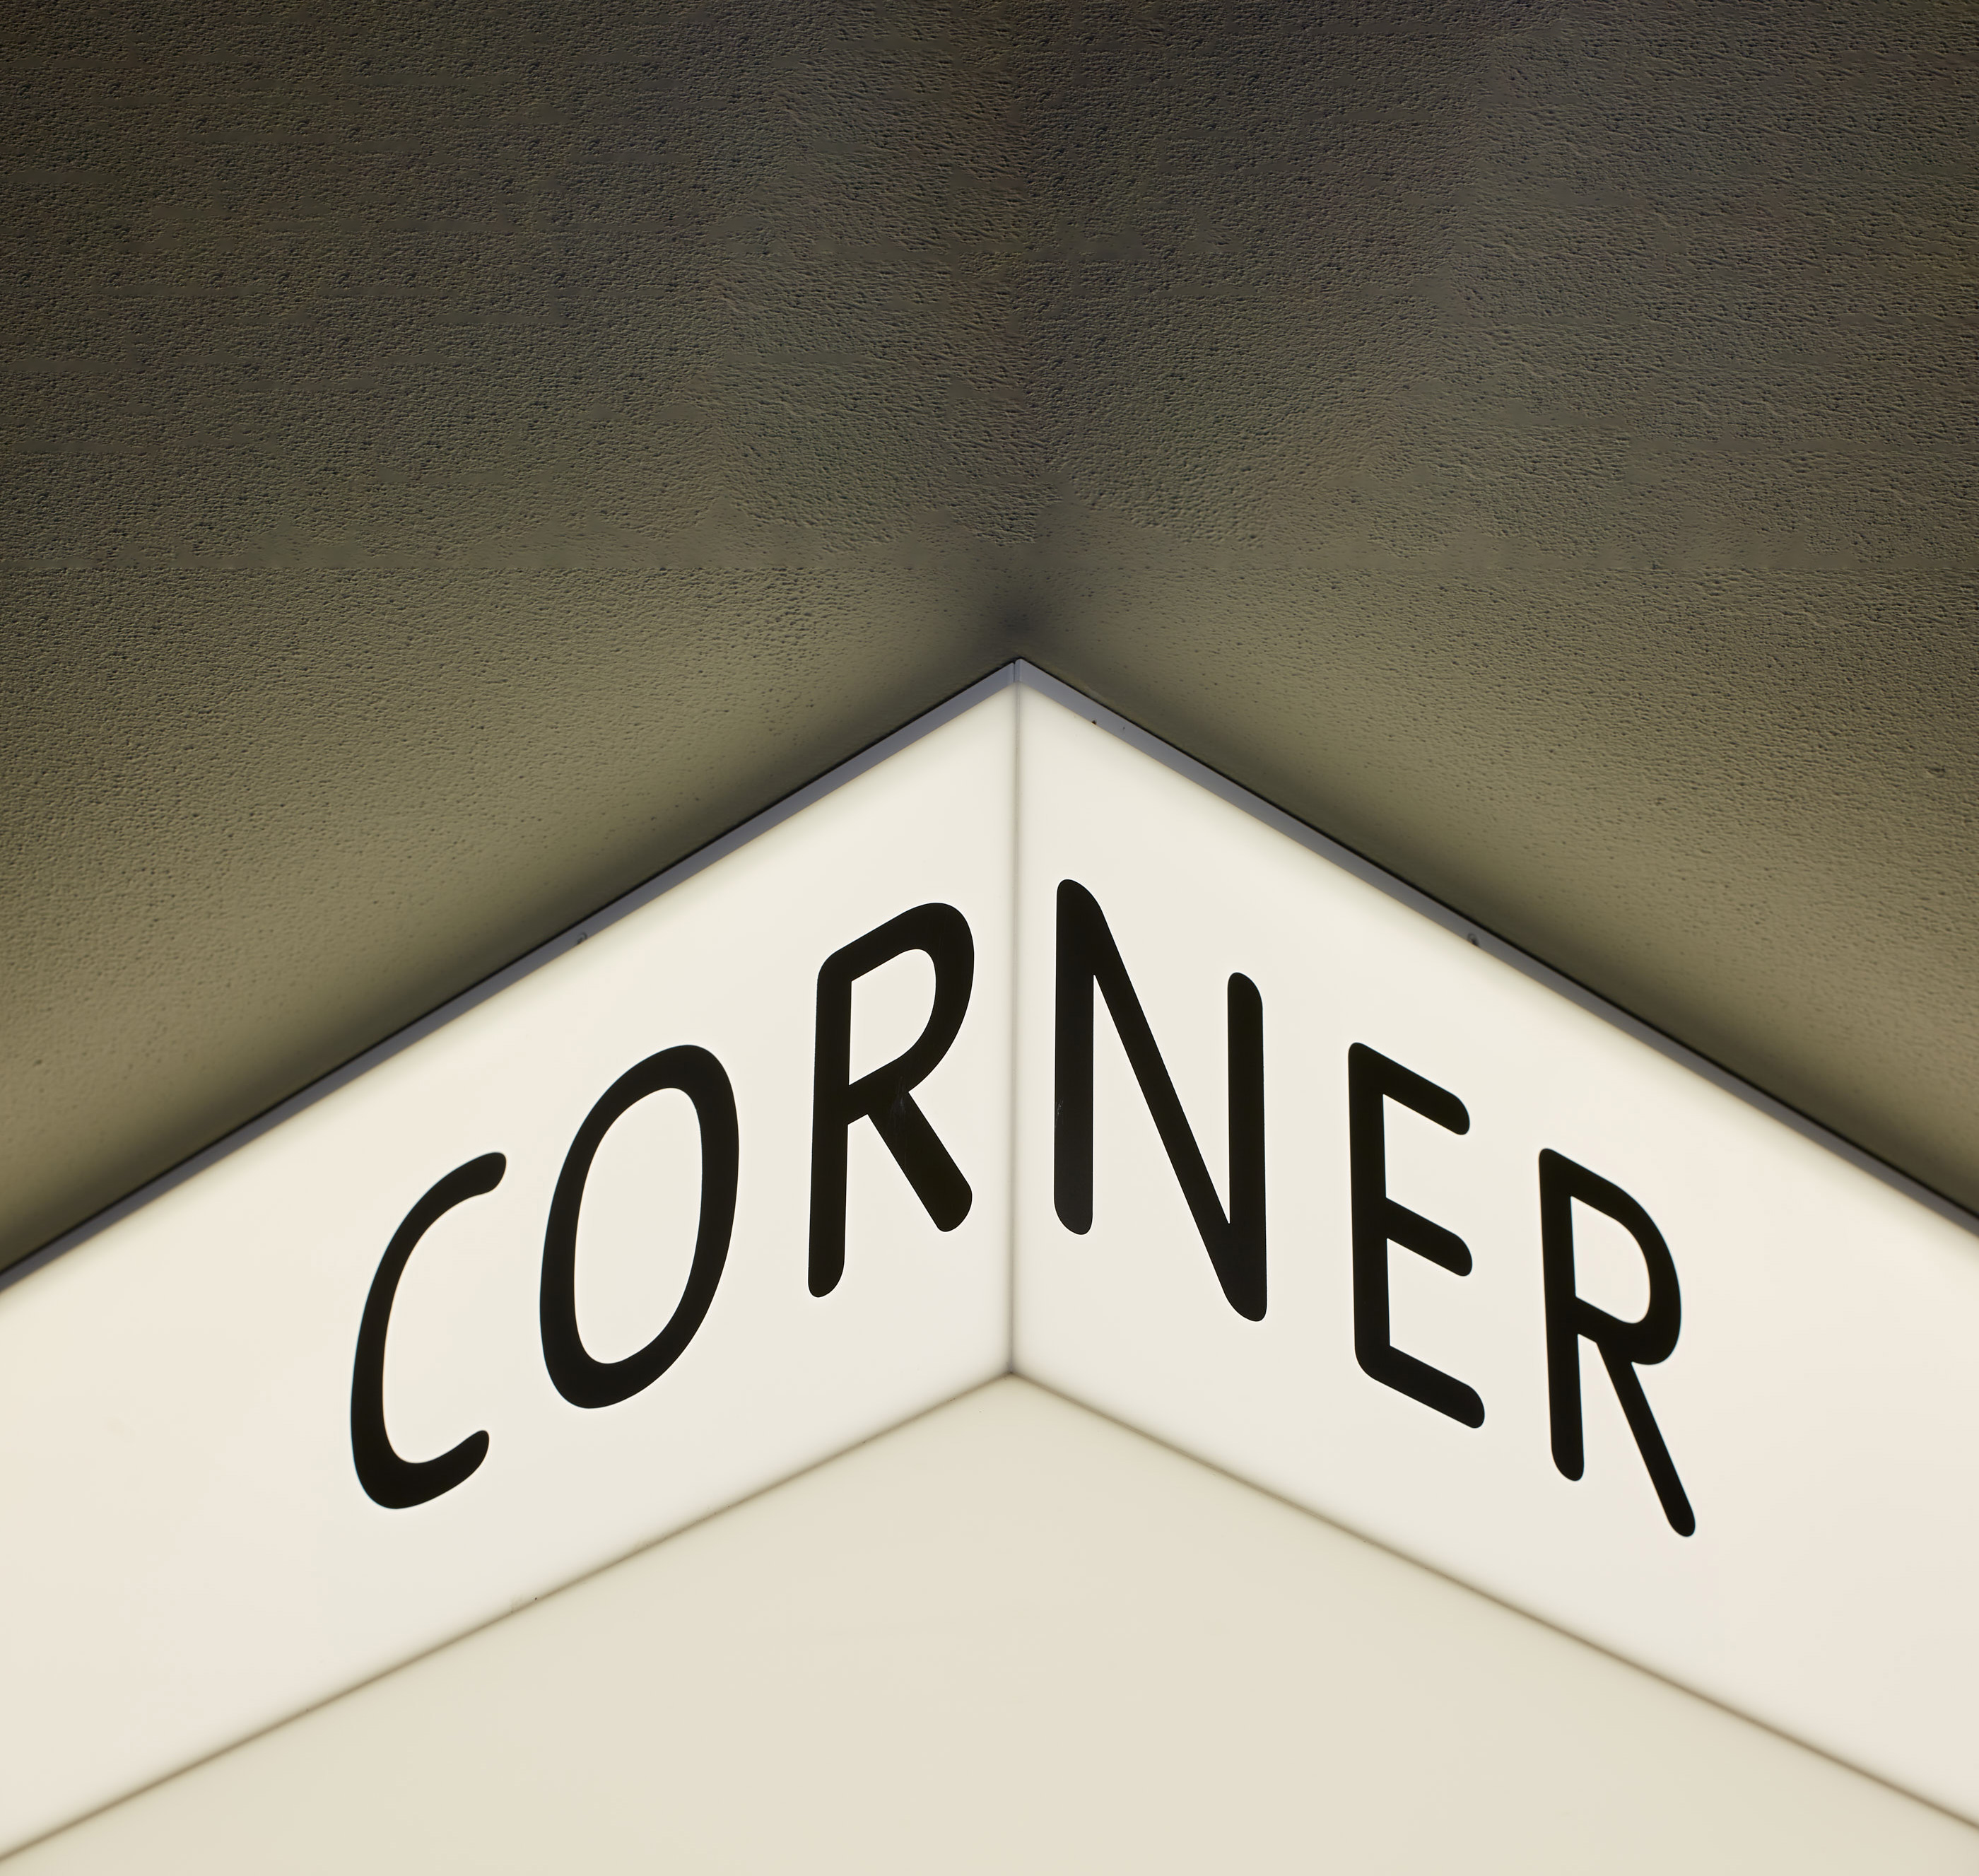 Corner Canyon Vector Logo - Download Free SVG Icon | Worldvectorlogo